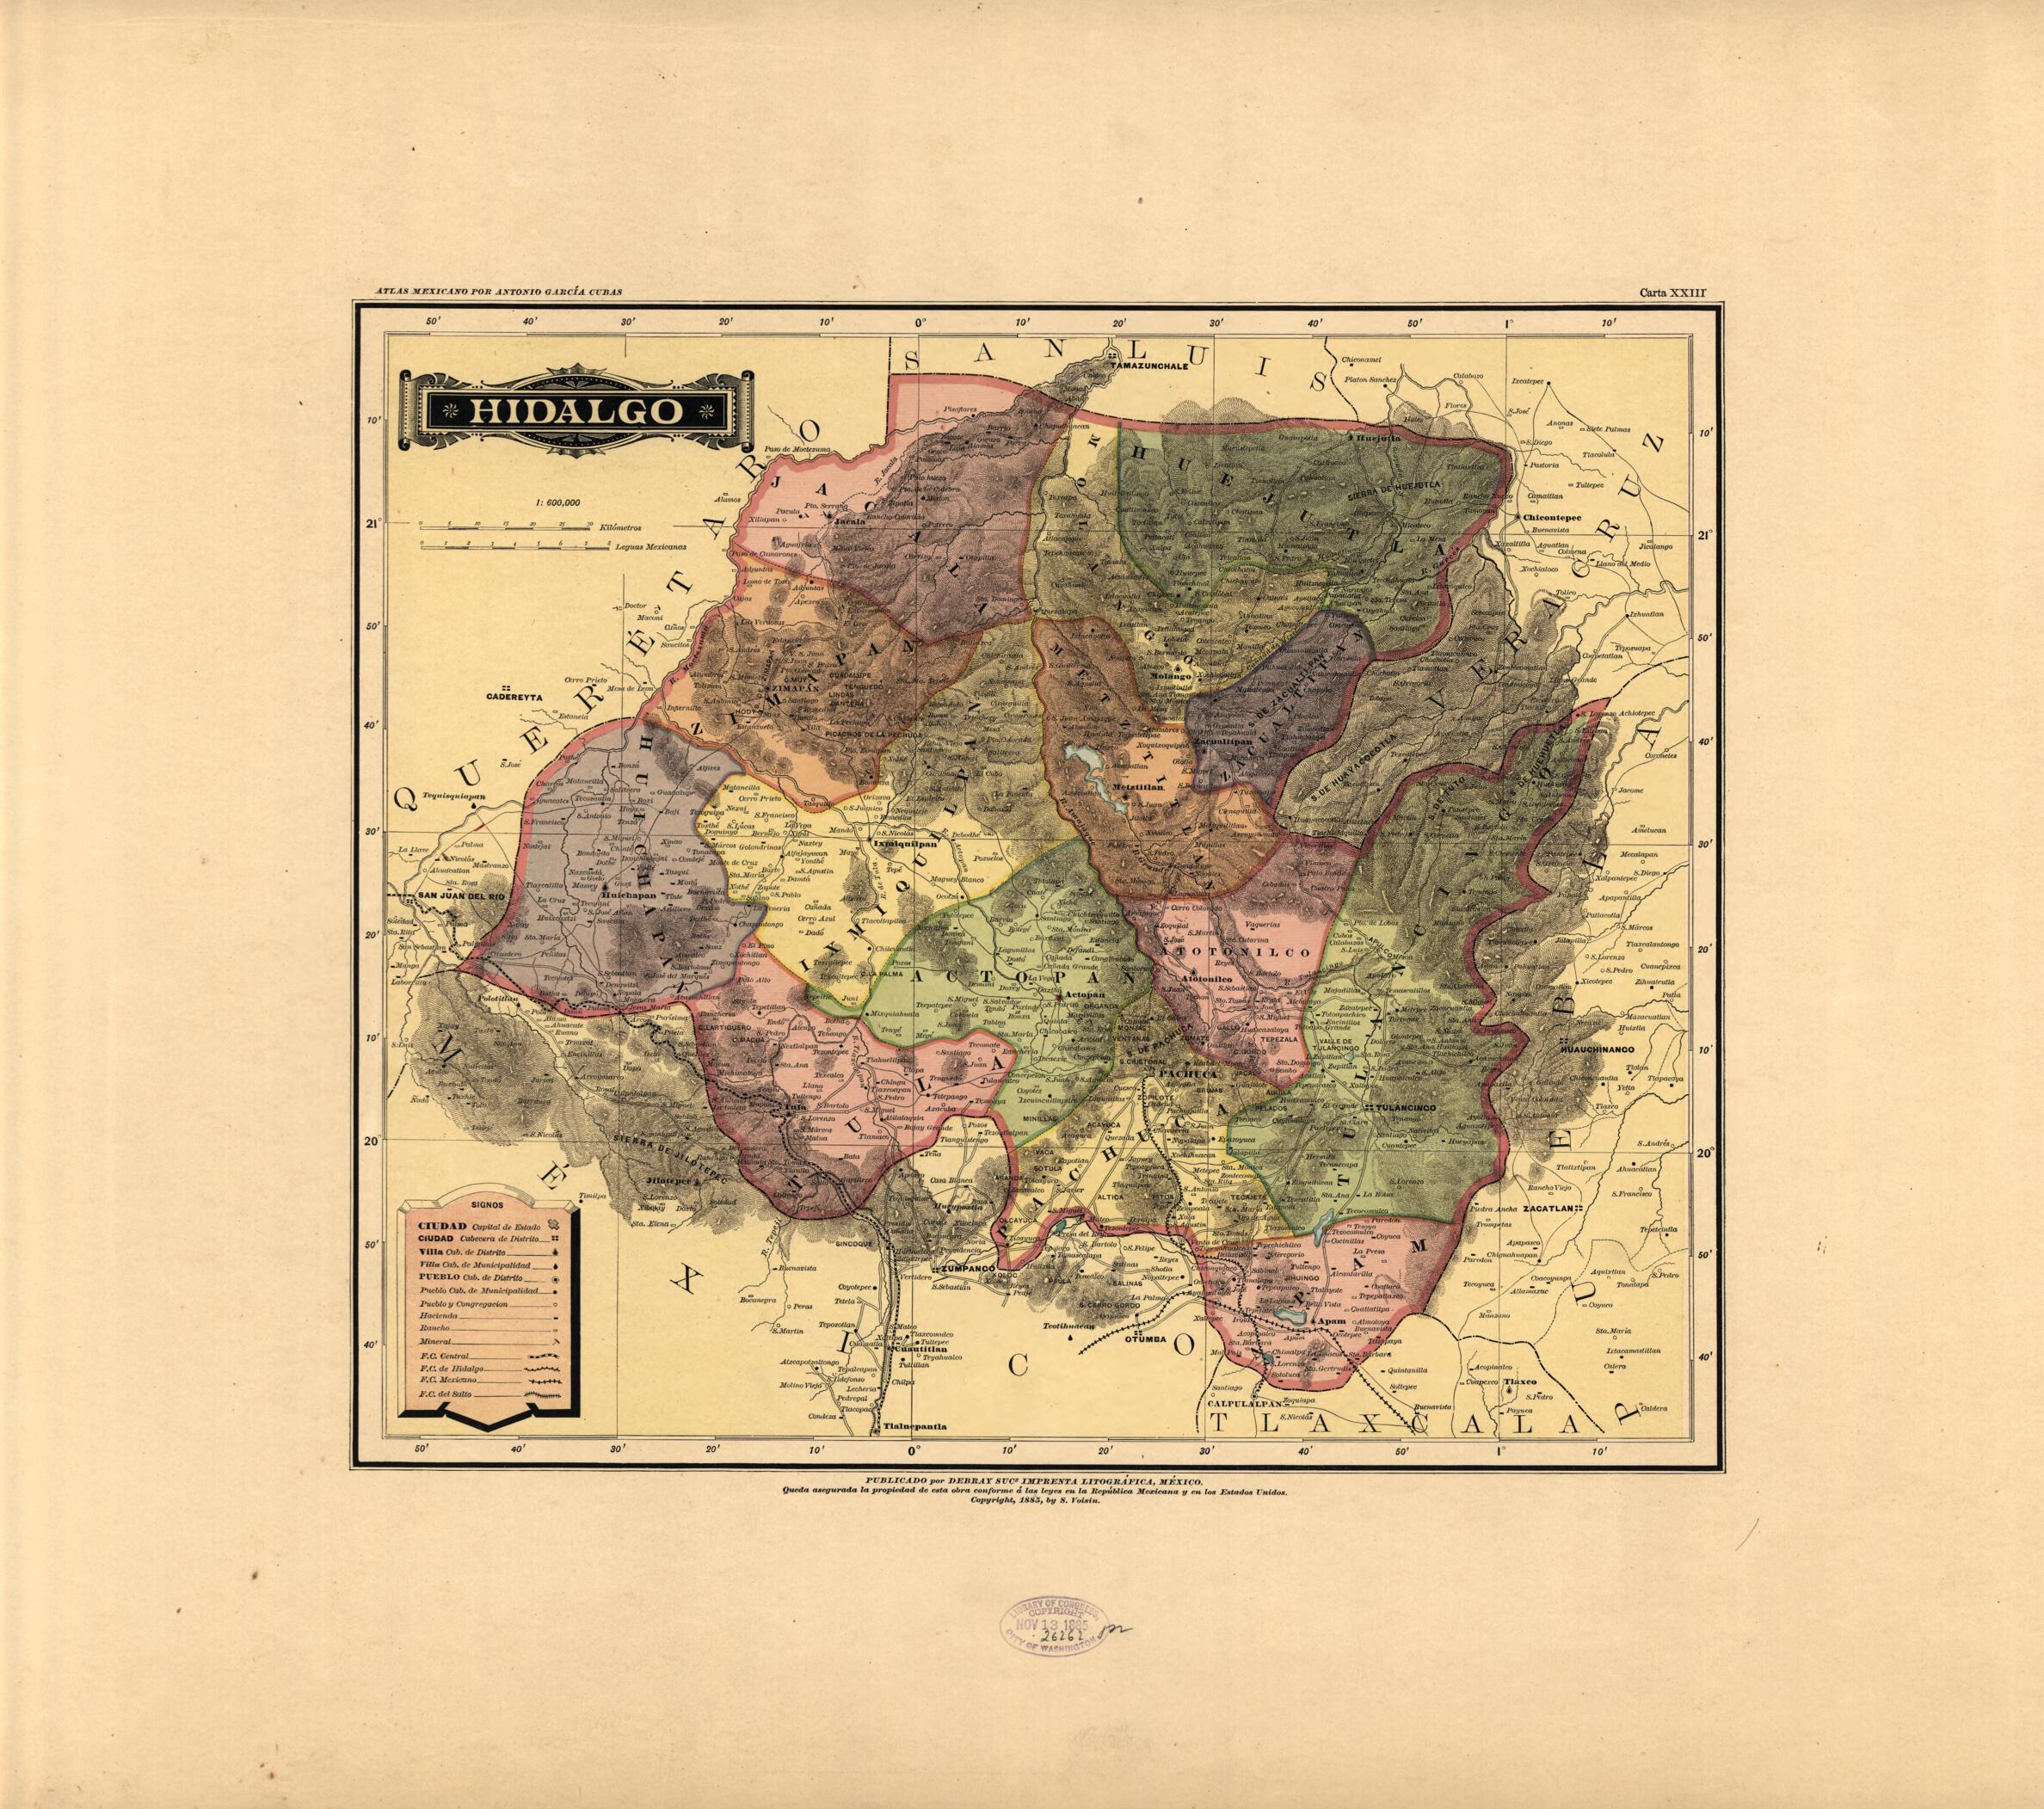 This old map of Hidalgo from Atlas Mexicano. from 1884 was created by Antonio García Cubas in 1884